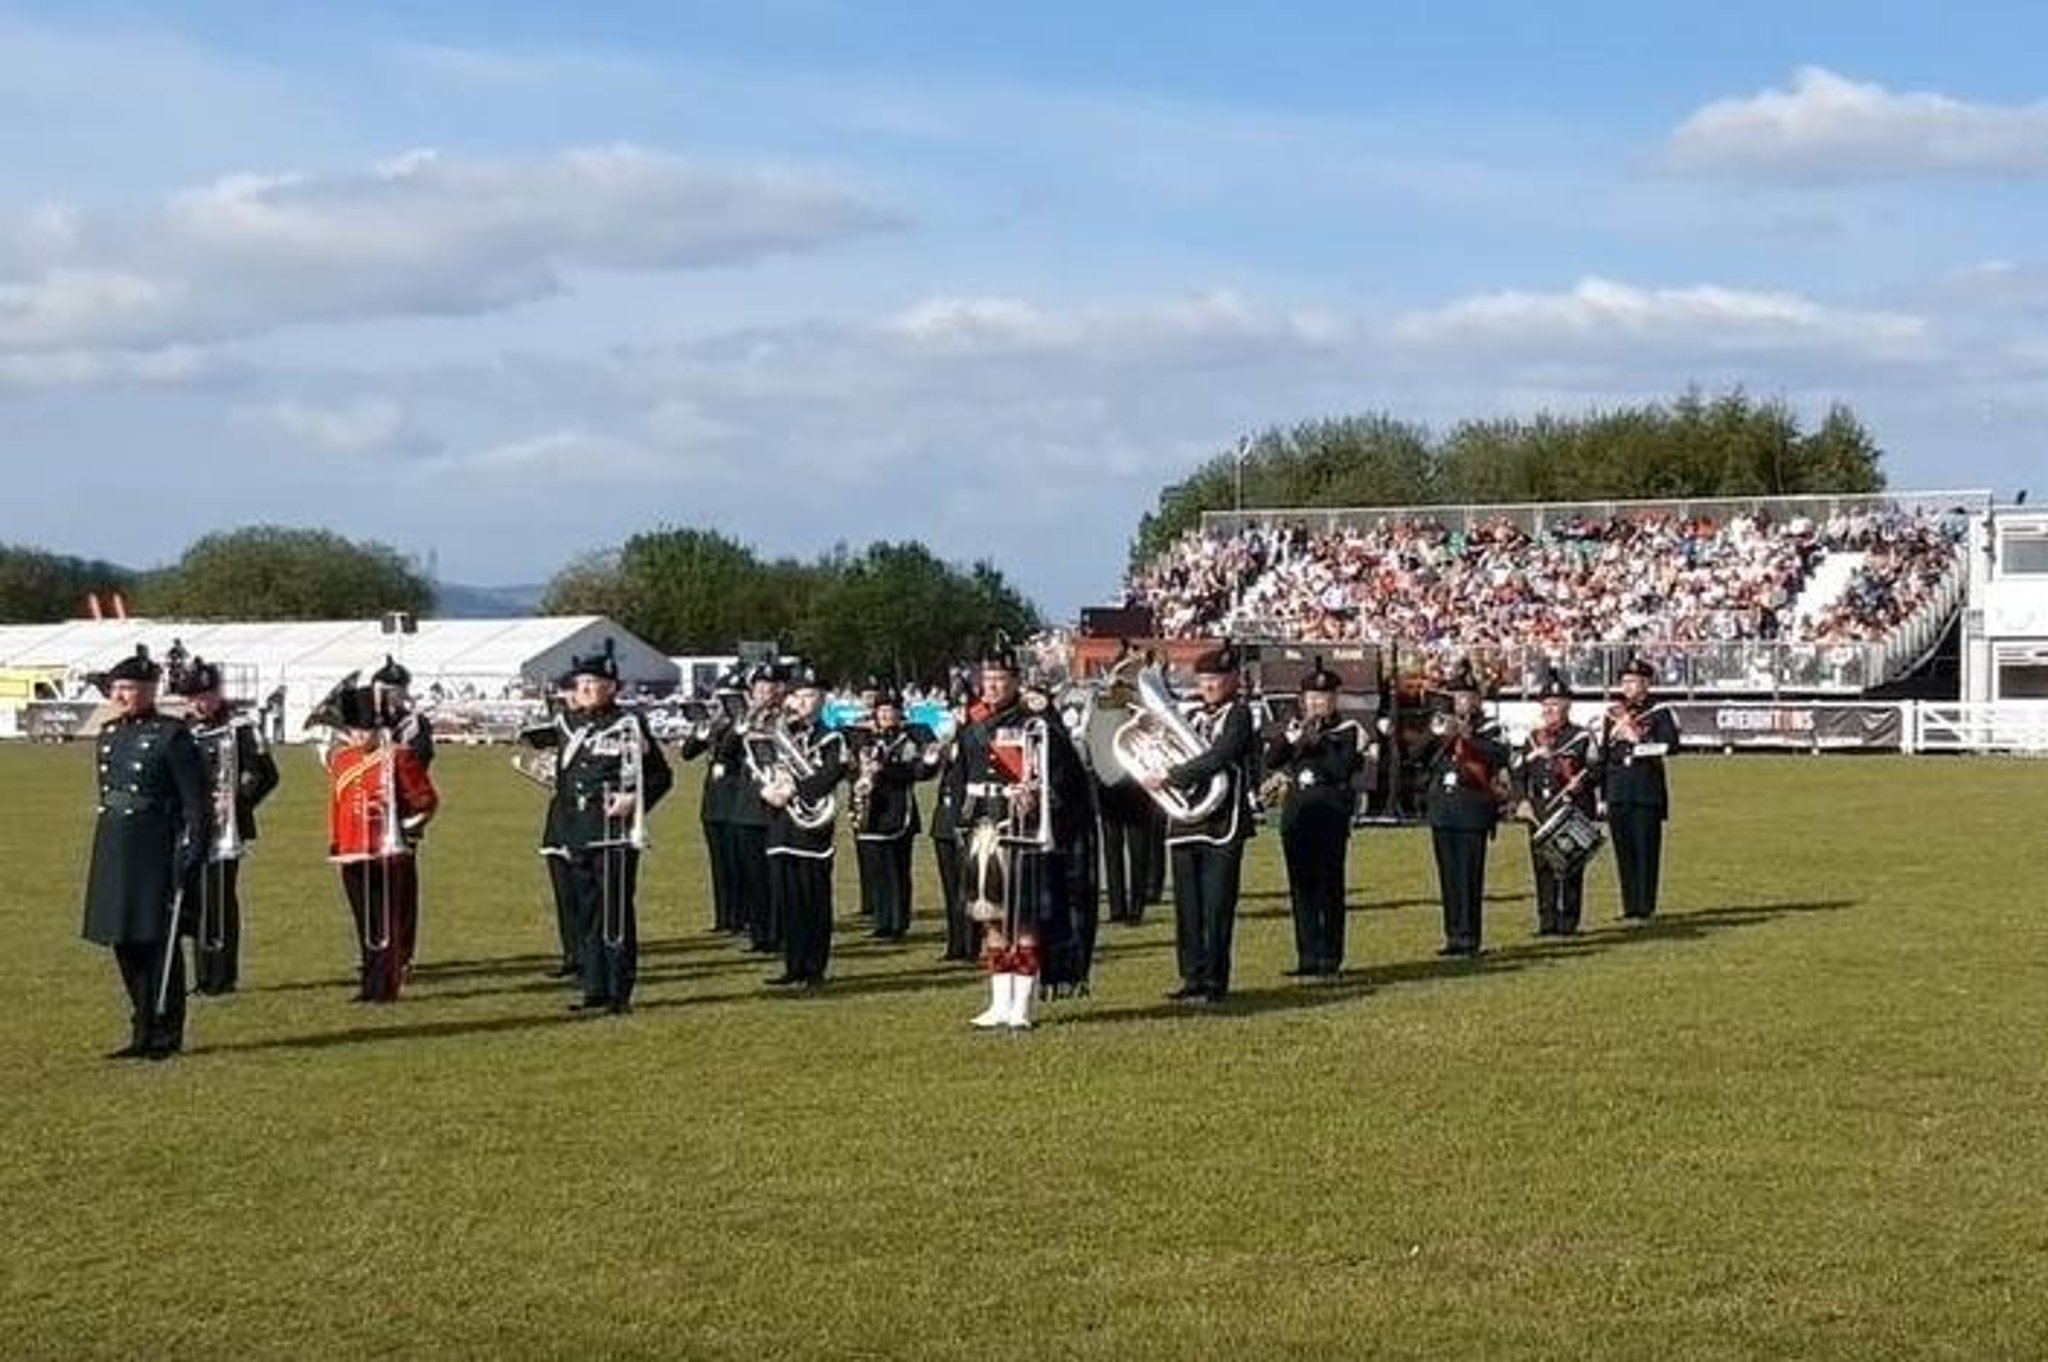 Video: A Royal Irish Regiment band plays at close of Balmoral Show